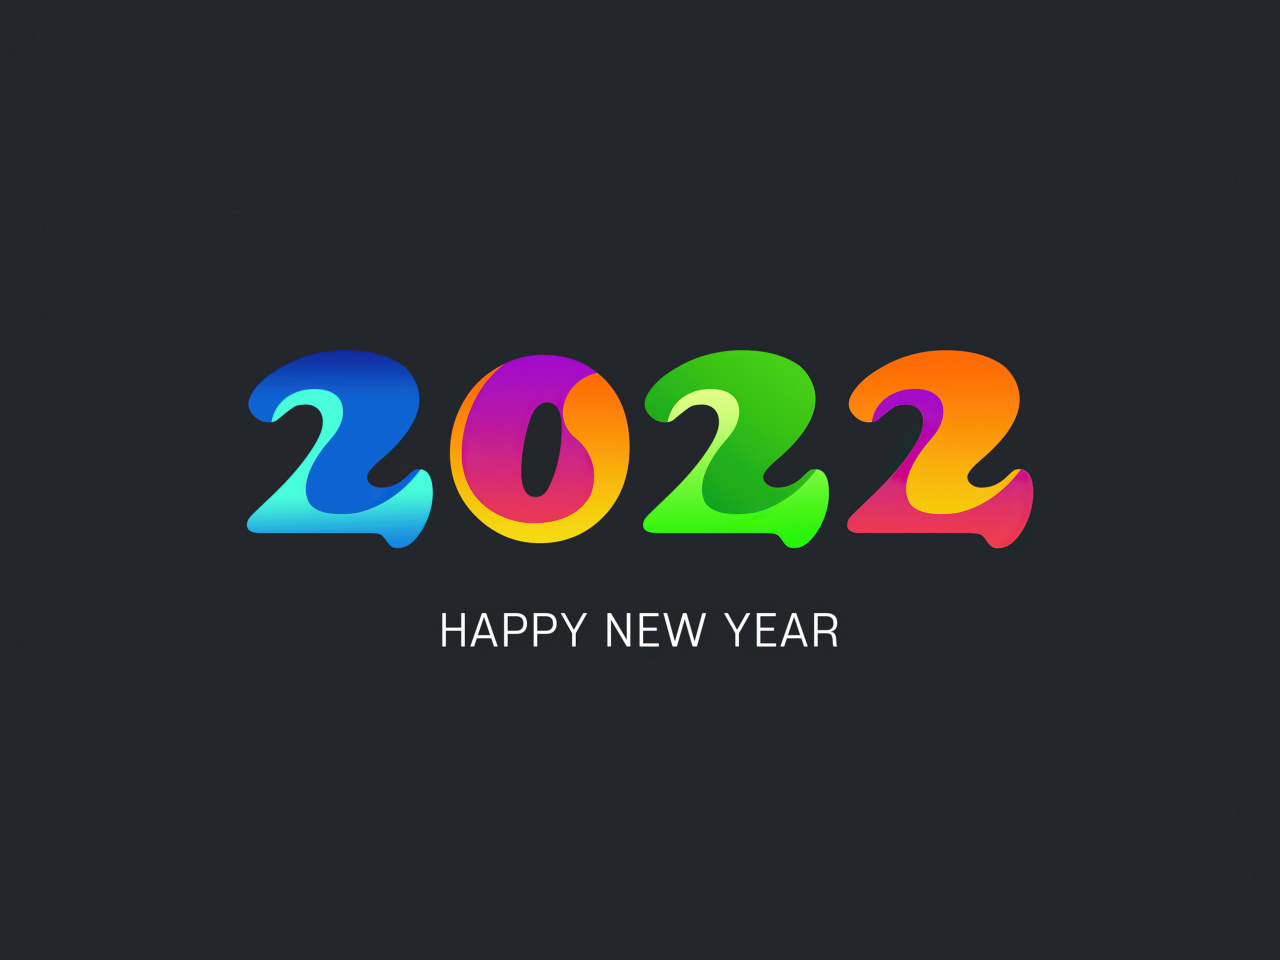 Happy new year 2022 wallpaper 1280x960